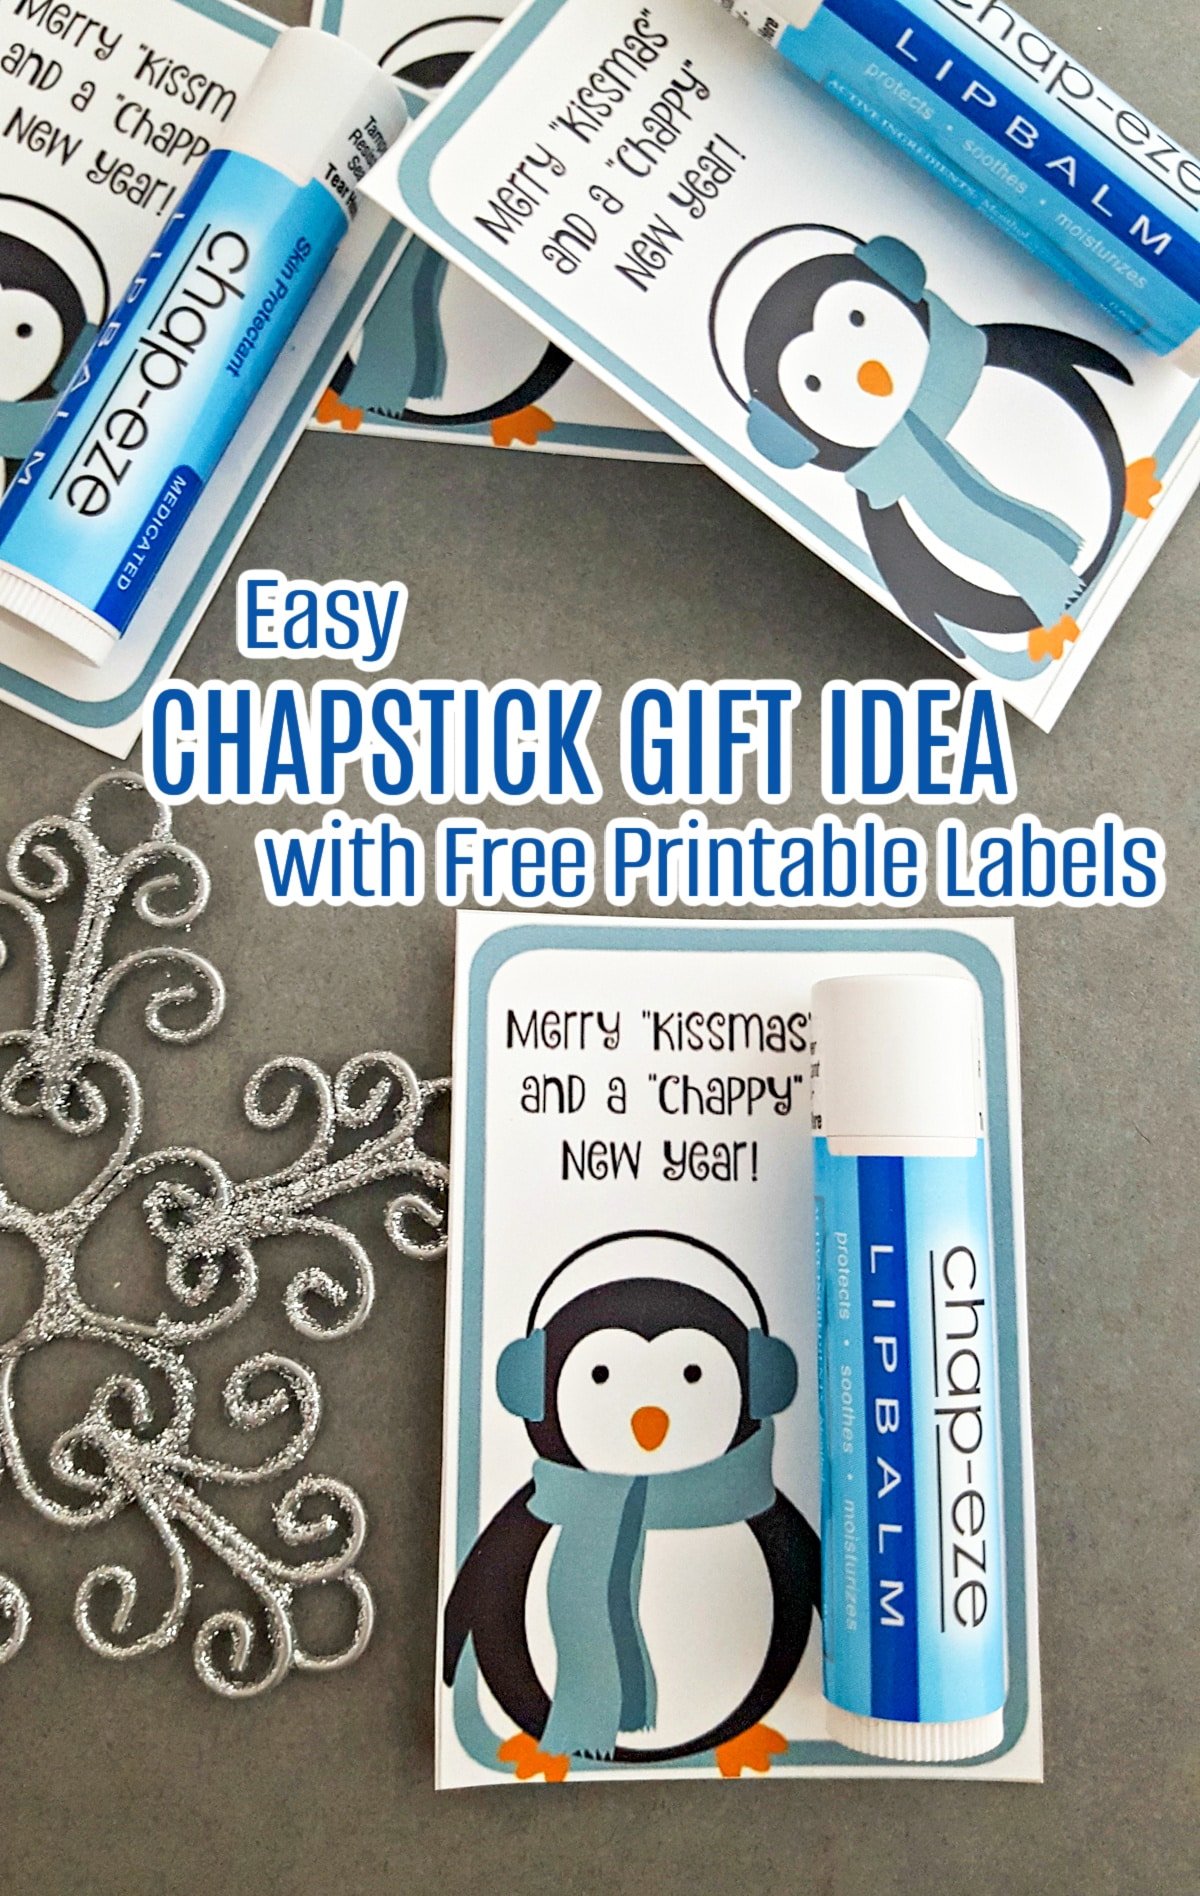 Easy Chapstick Gift Idea.